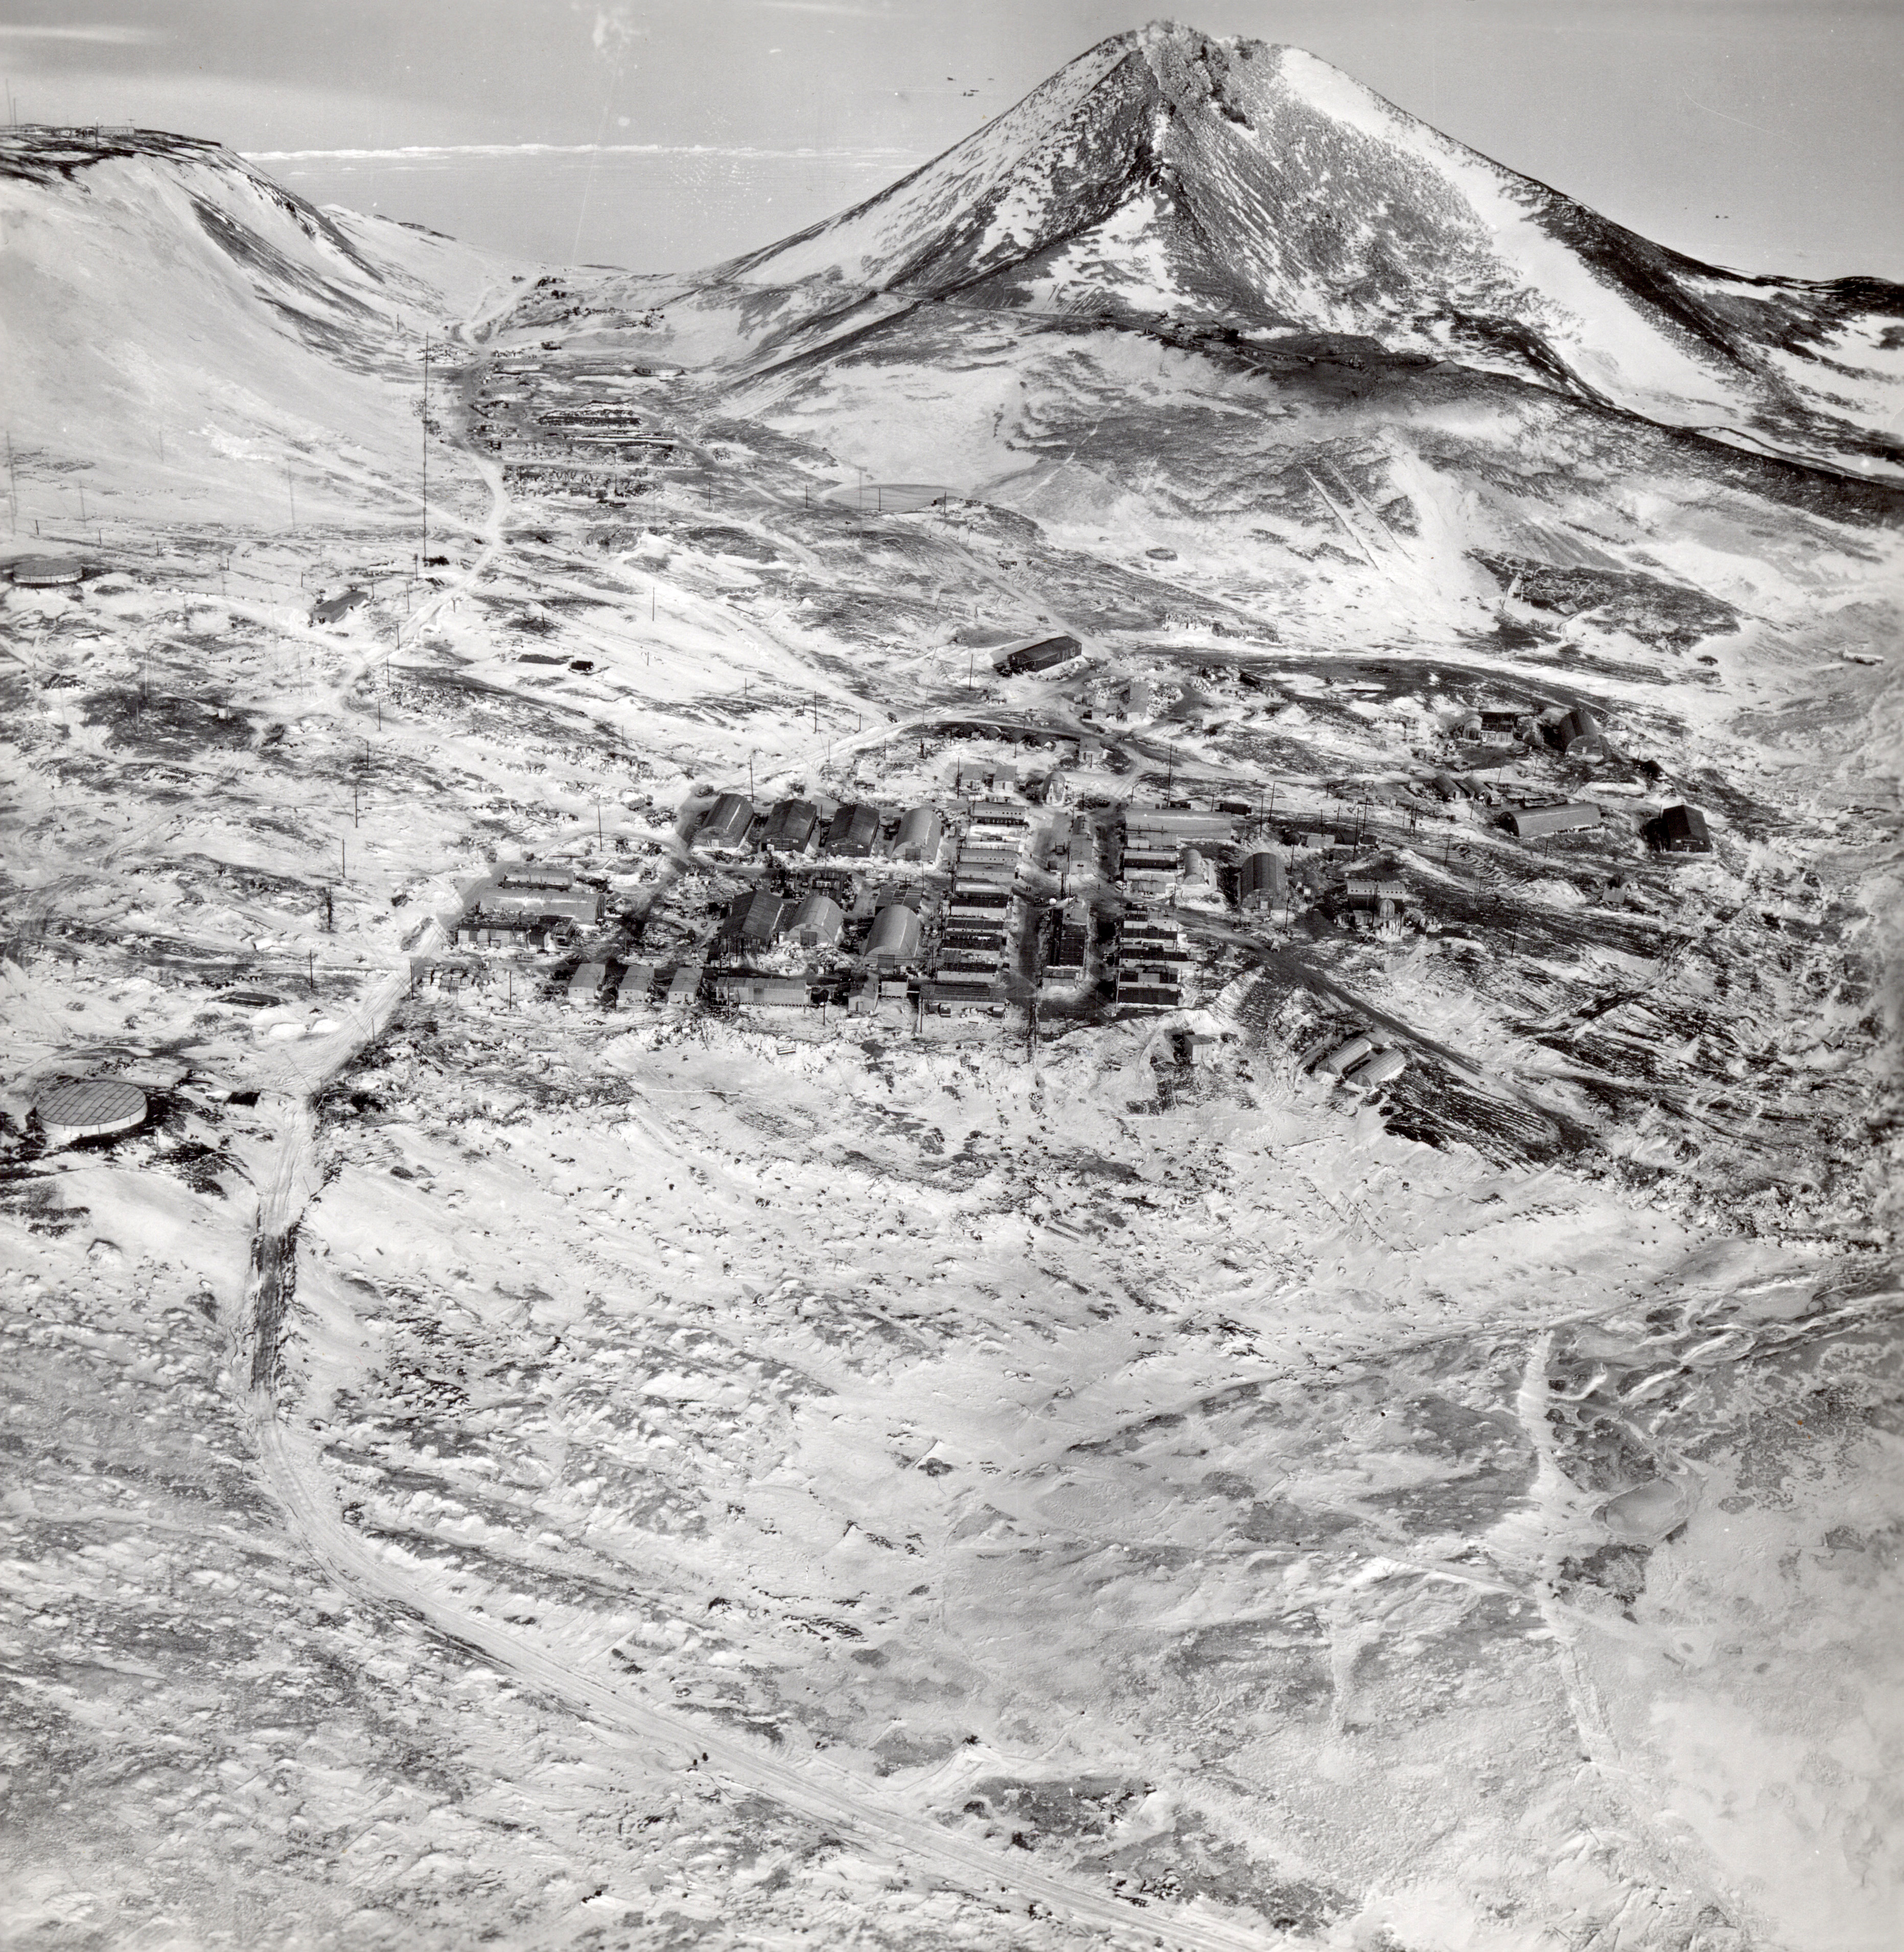 McMurdo Station, austral summer of 1960 - 1961